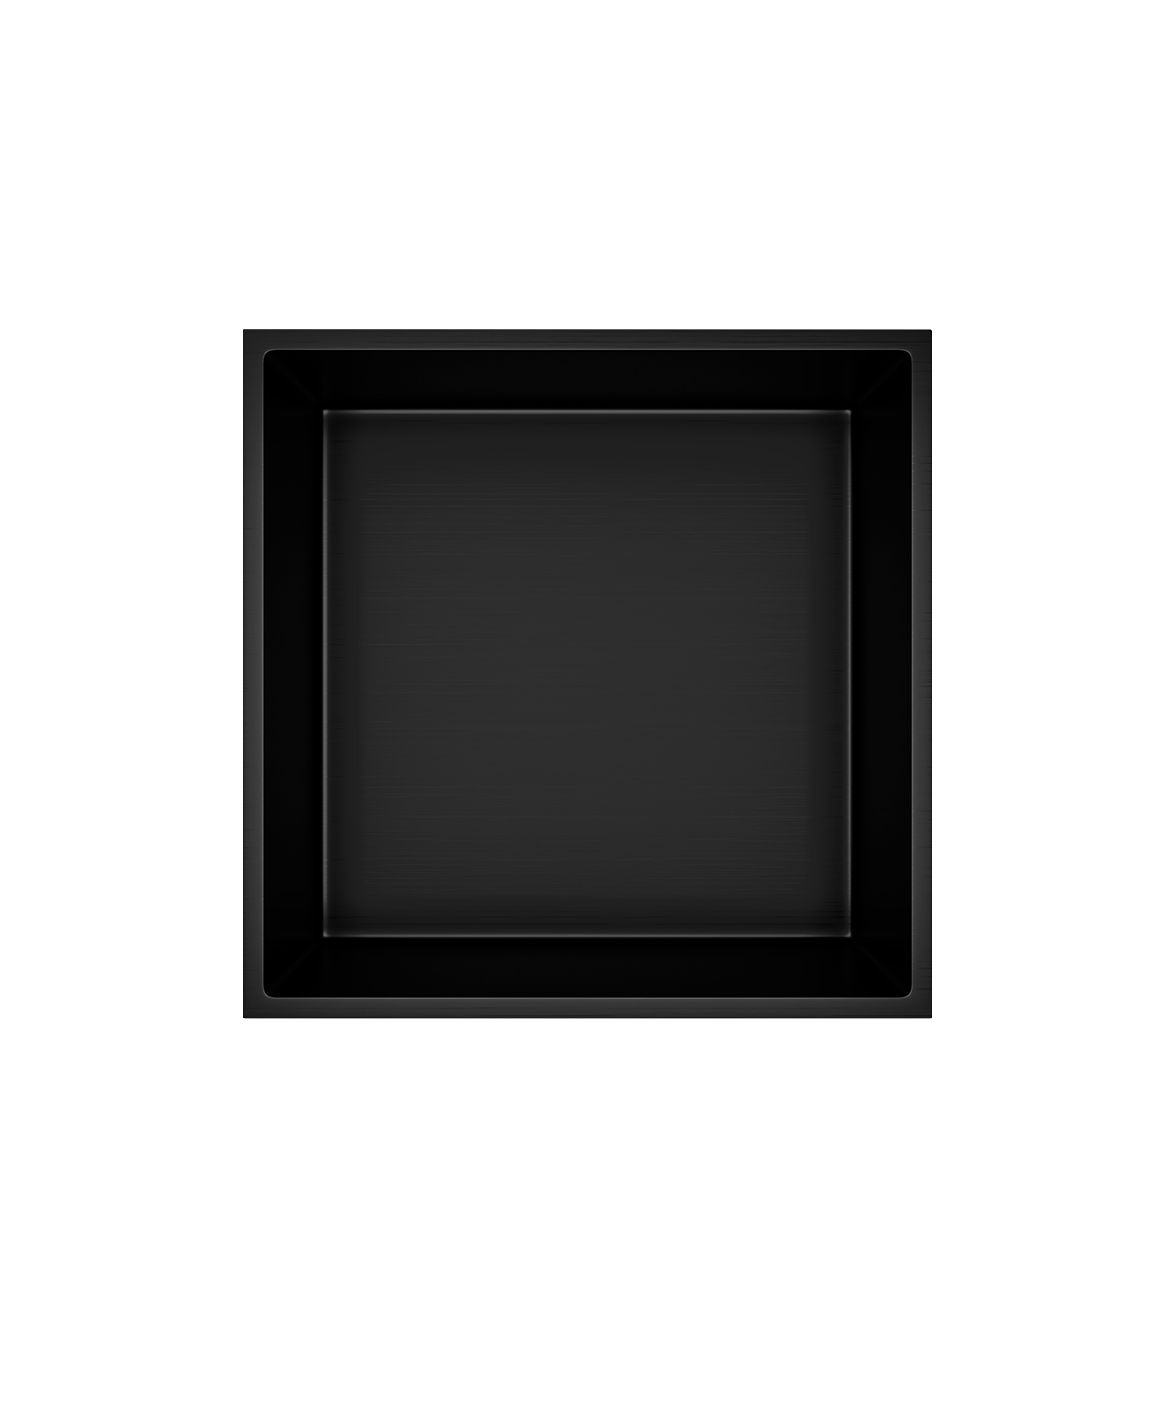 Wandnische Edelstahl schwarz matt rostfrei 305x305x100mm - Schwarz Matt - Aloni